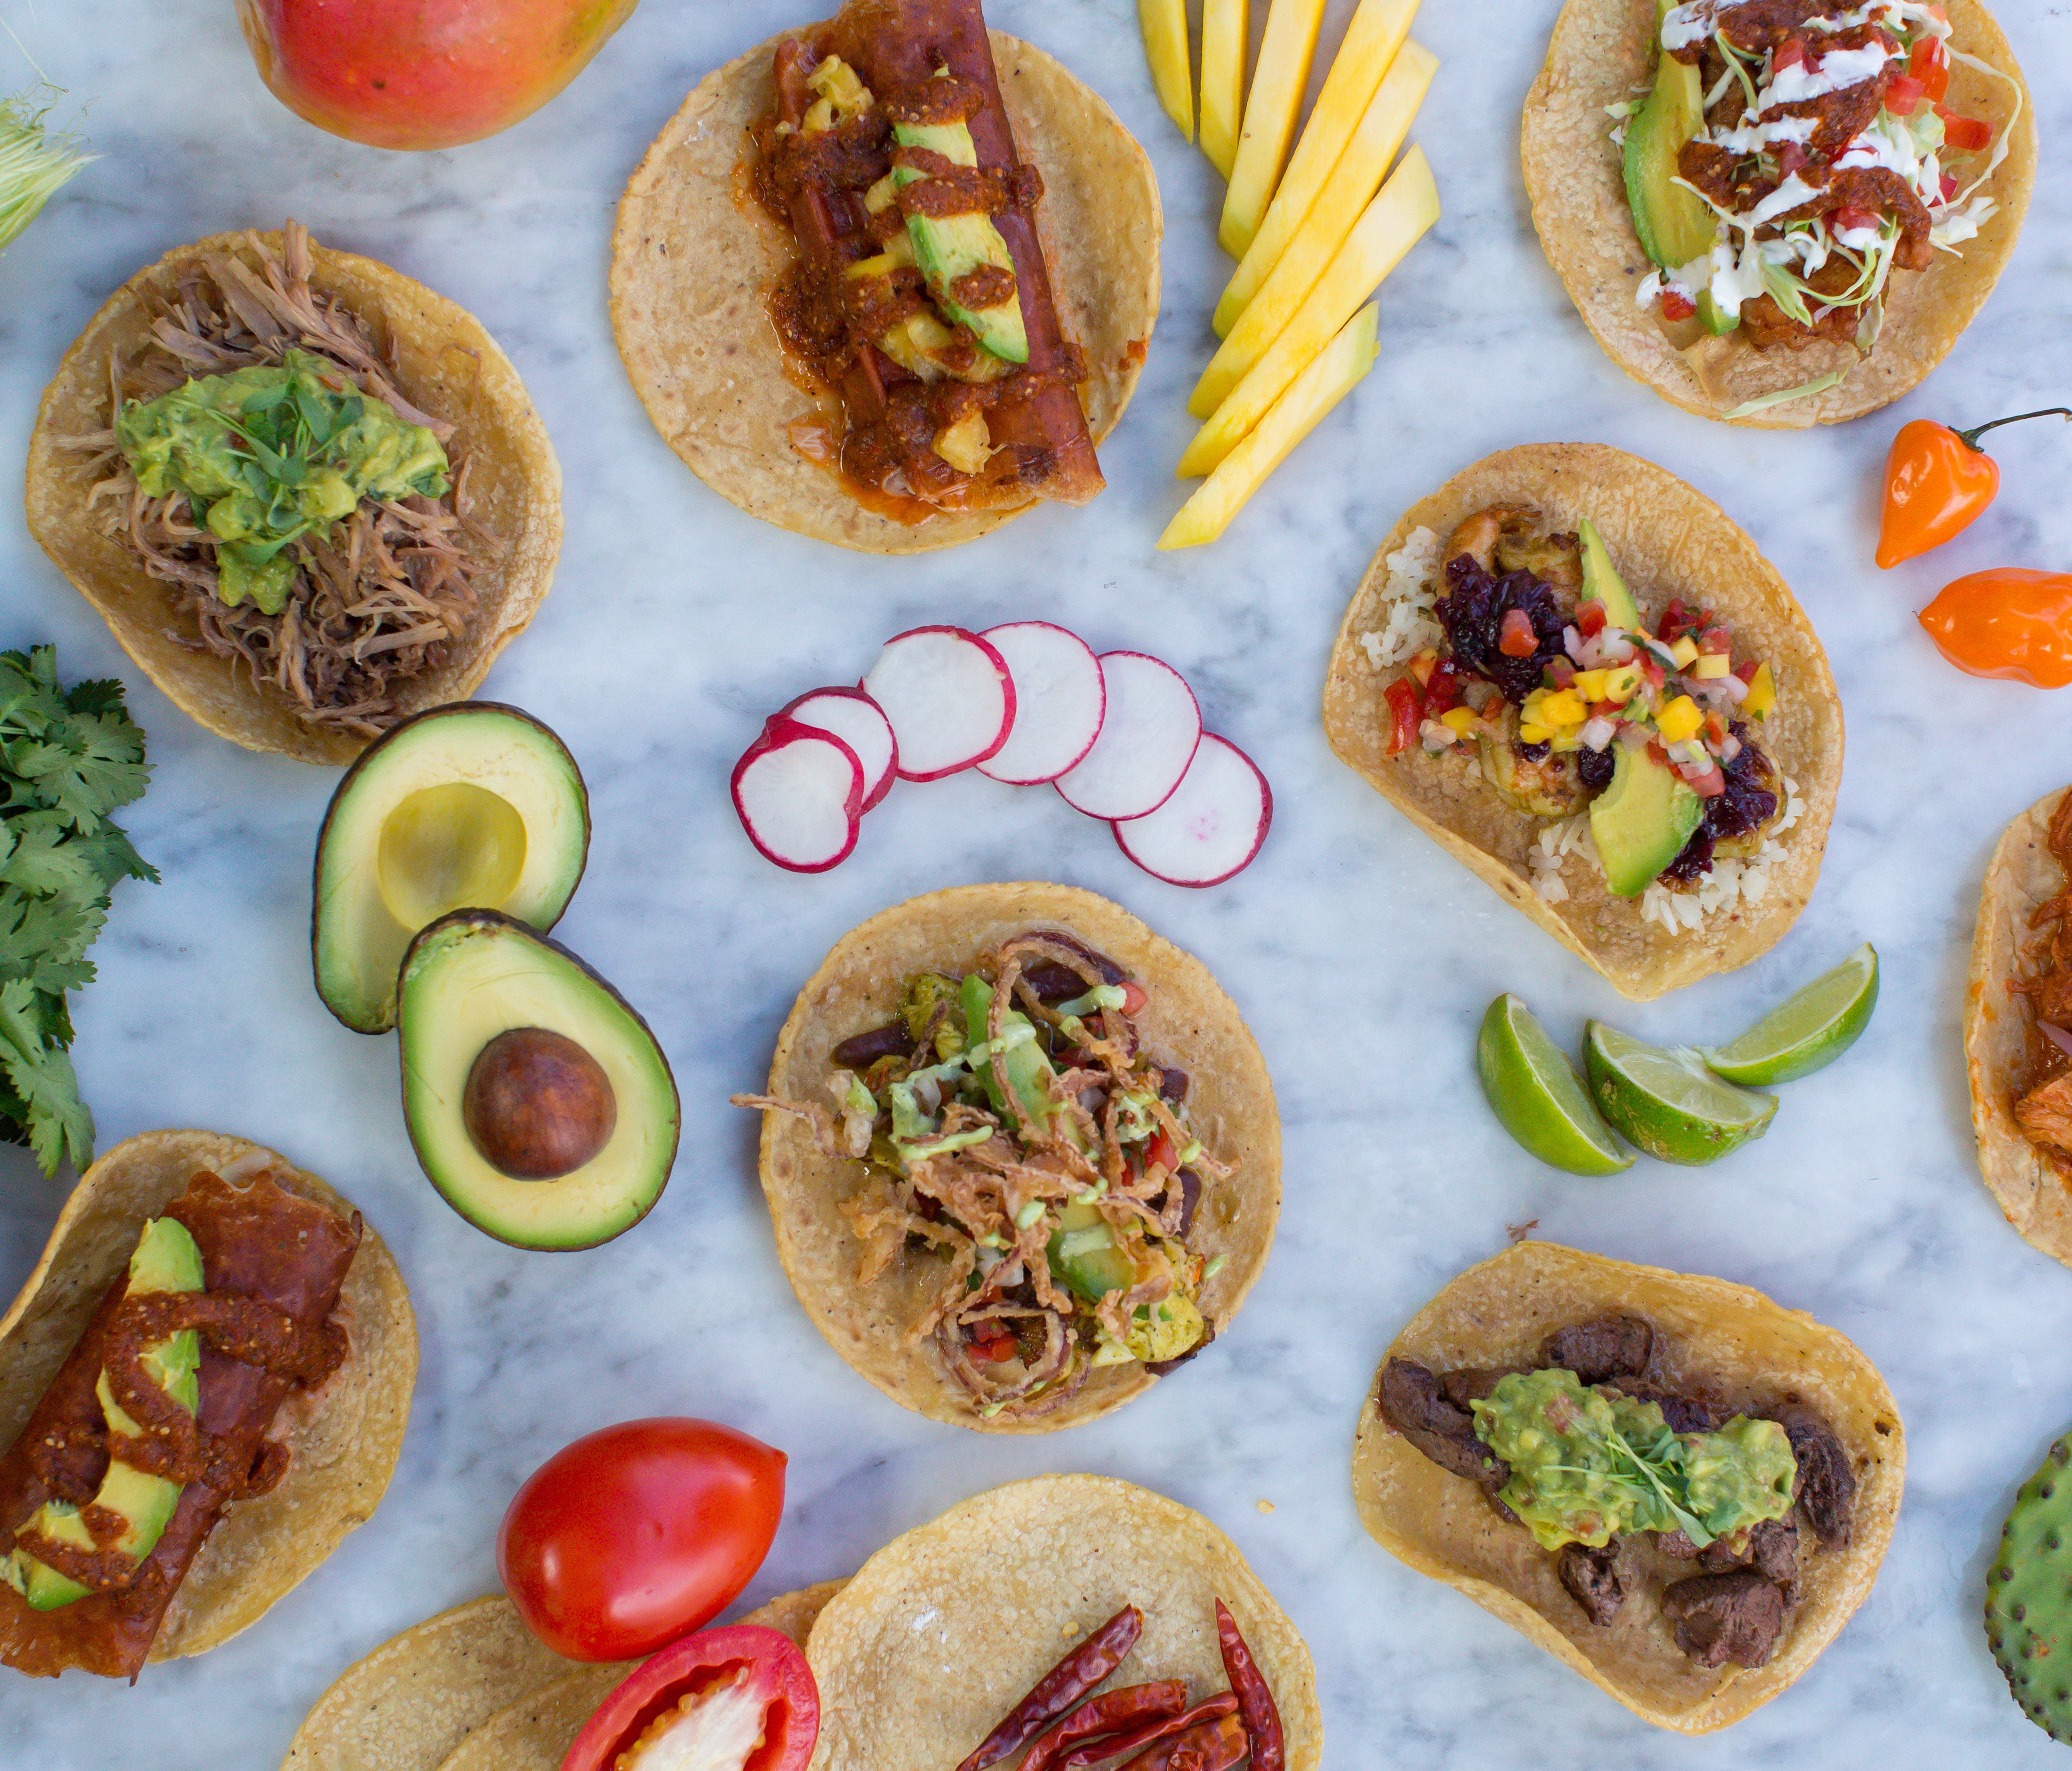 Don't miss Puesto's tacos, from filet mignon and lamb barbacoa to market fish and mushroom.